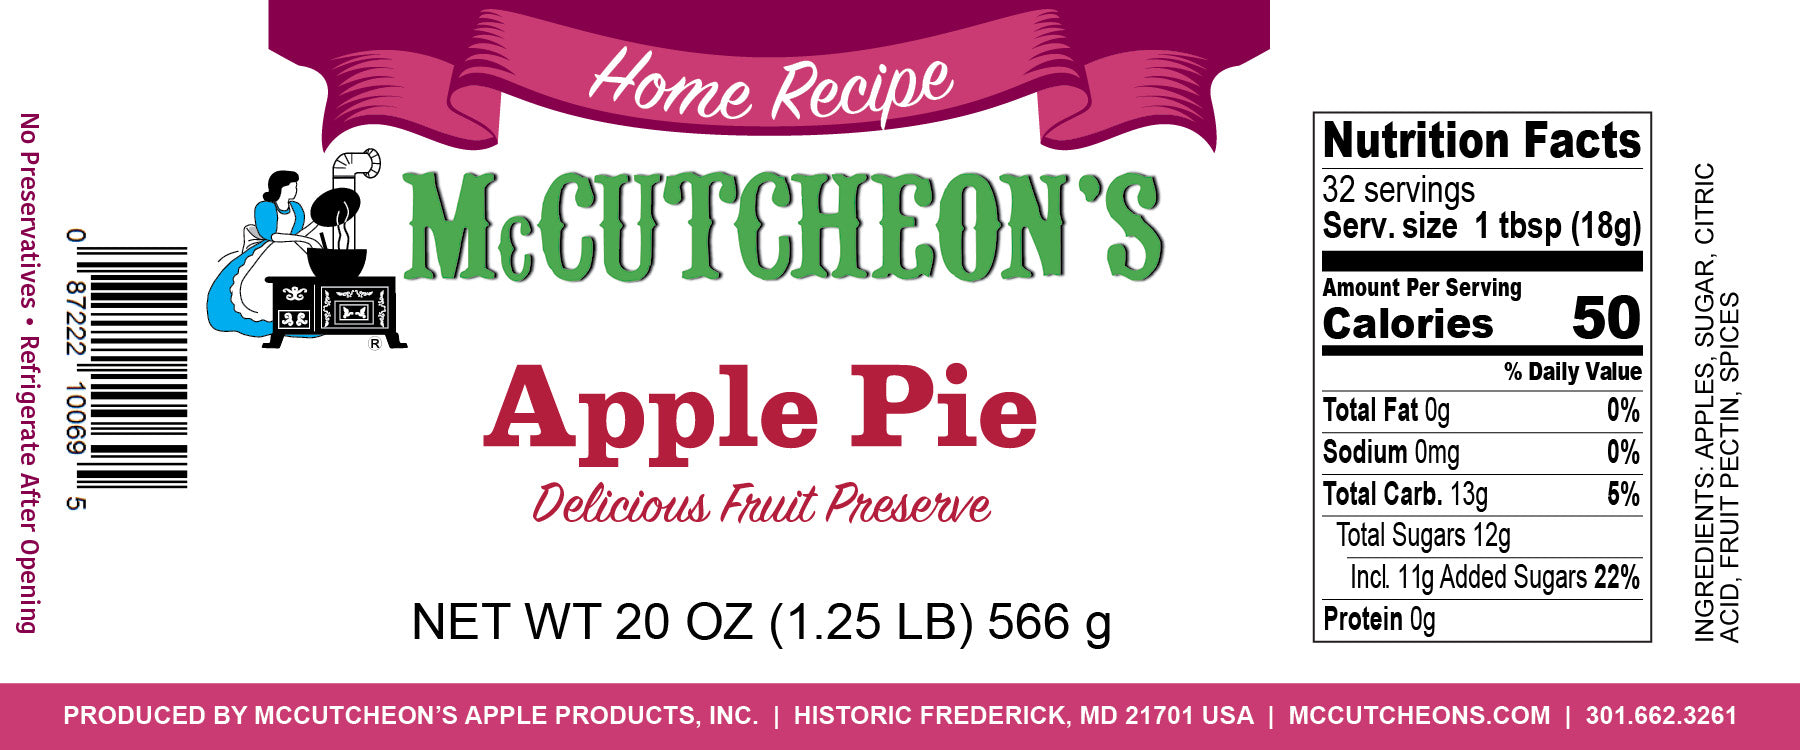 nutritional label for McCutcheon's Apple Pie fruit preserves